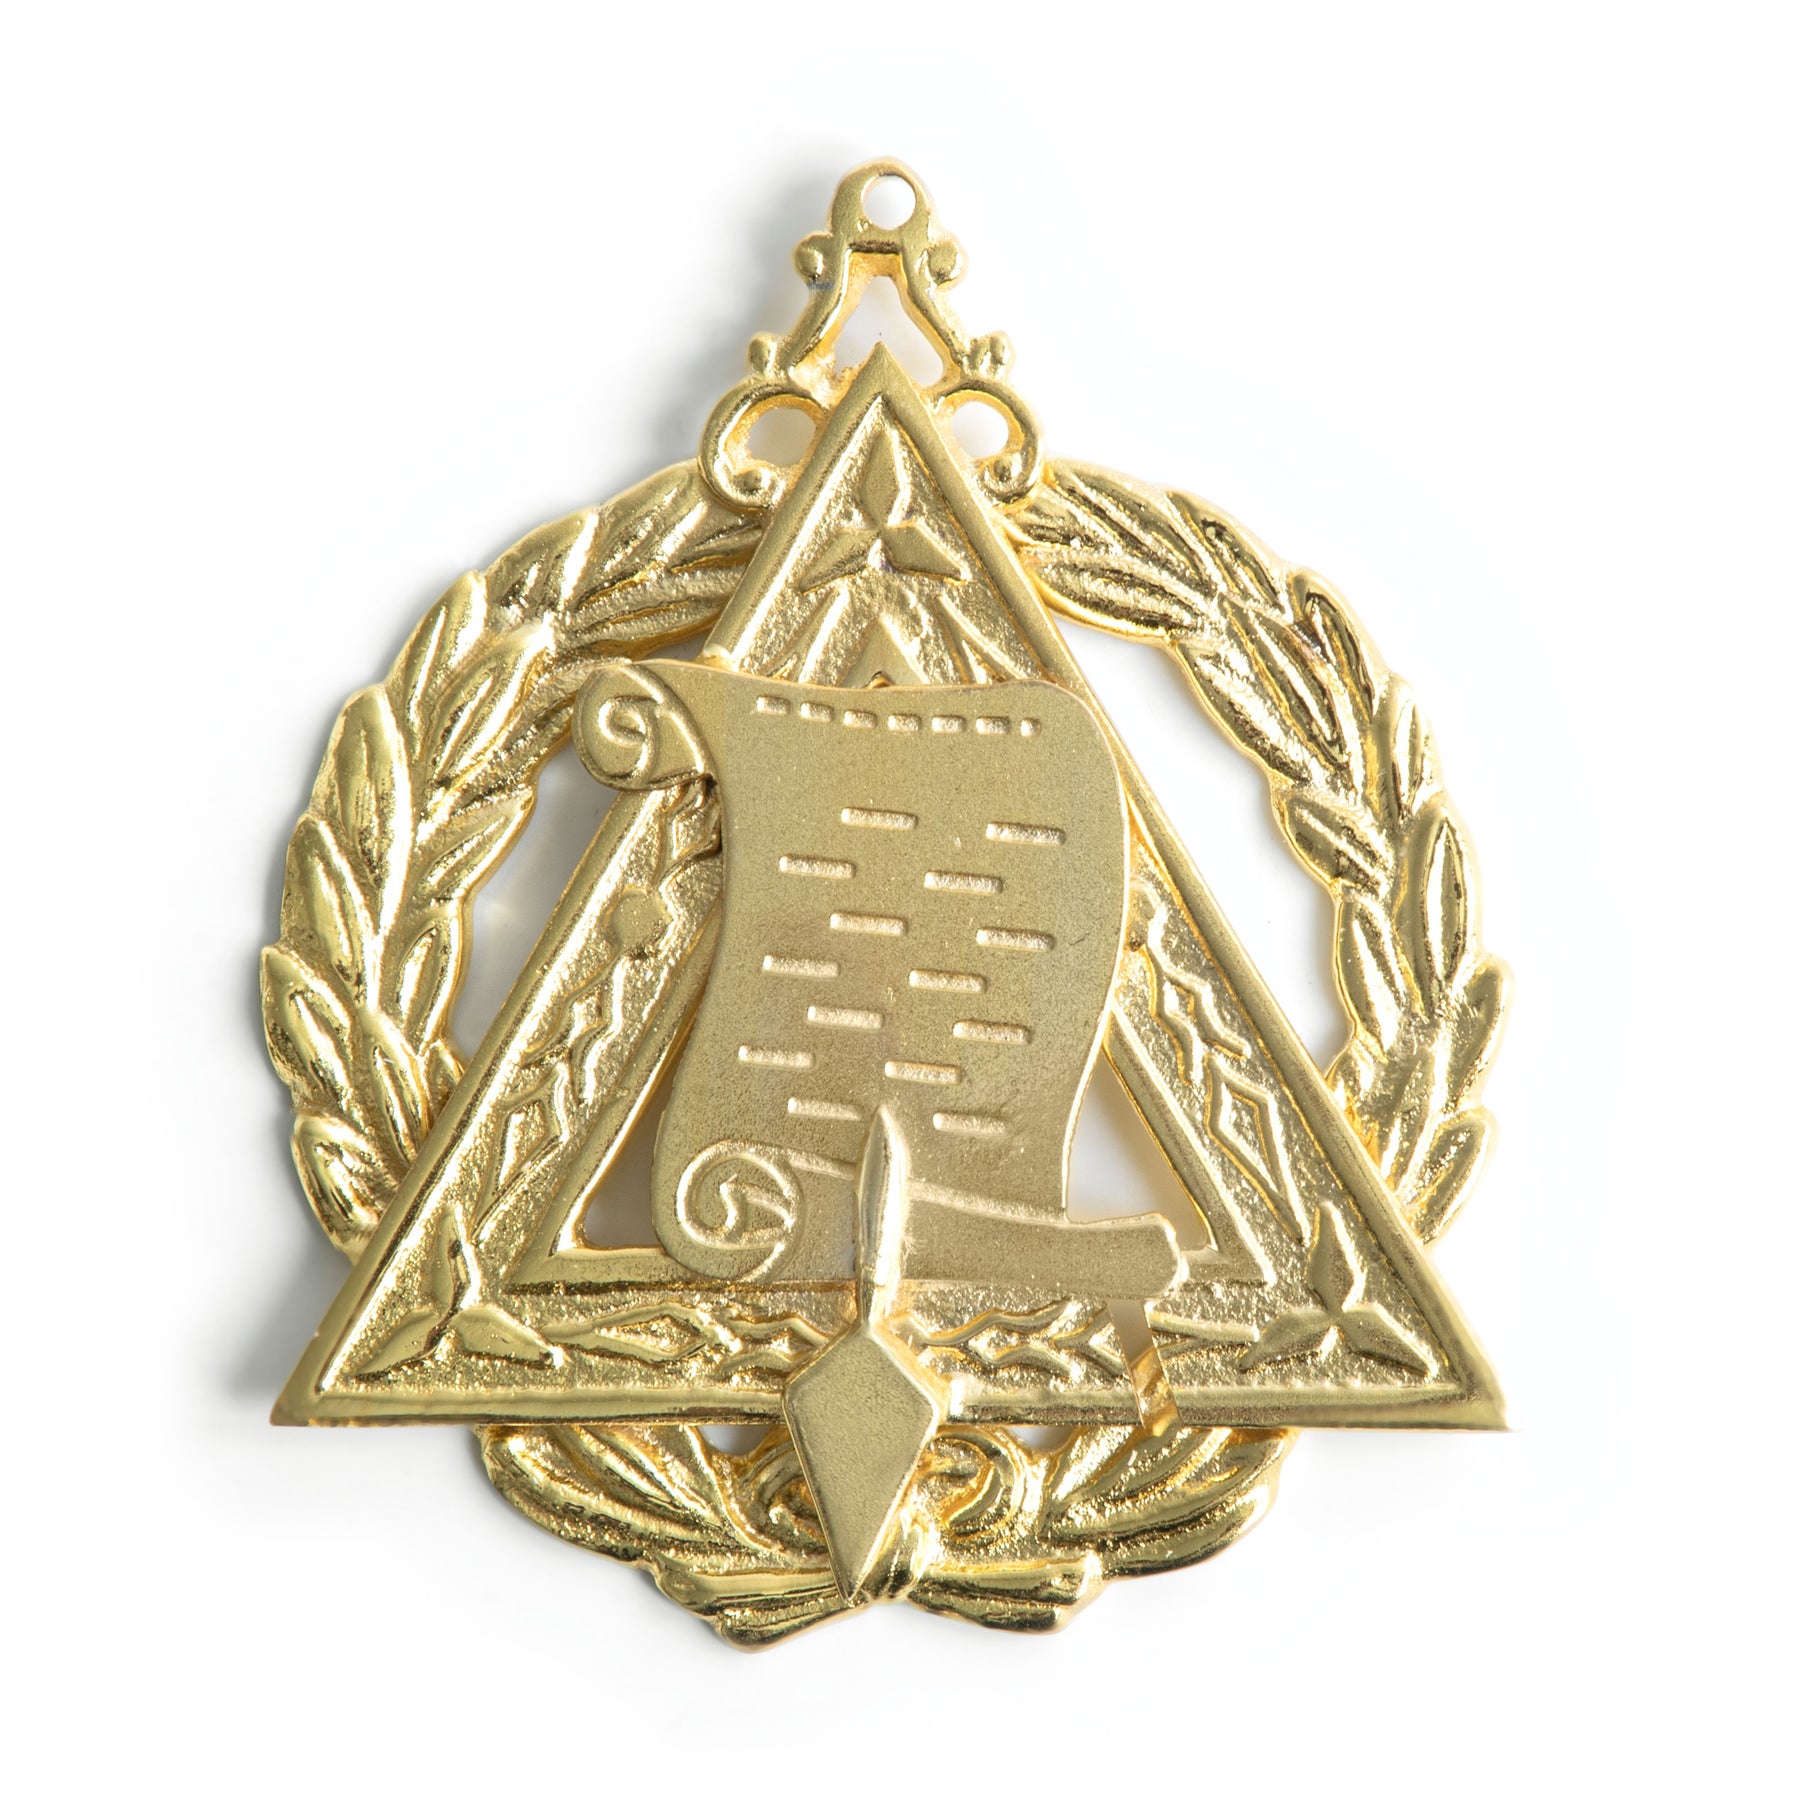 Grand Orator Royal & Select Masters Officer Collar Jewel - Gold Plated - Bricks Masons